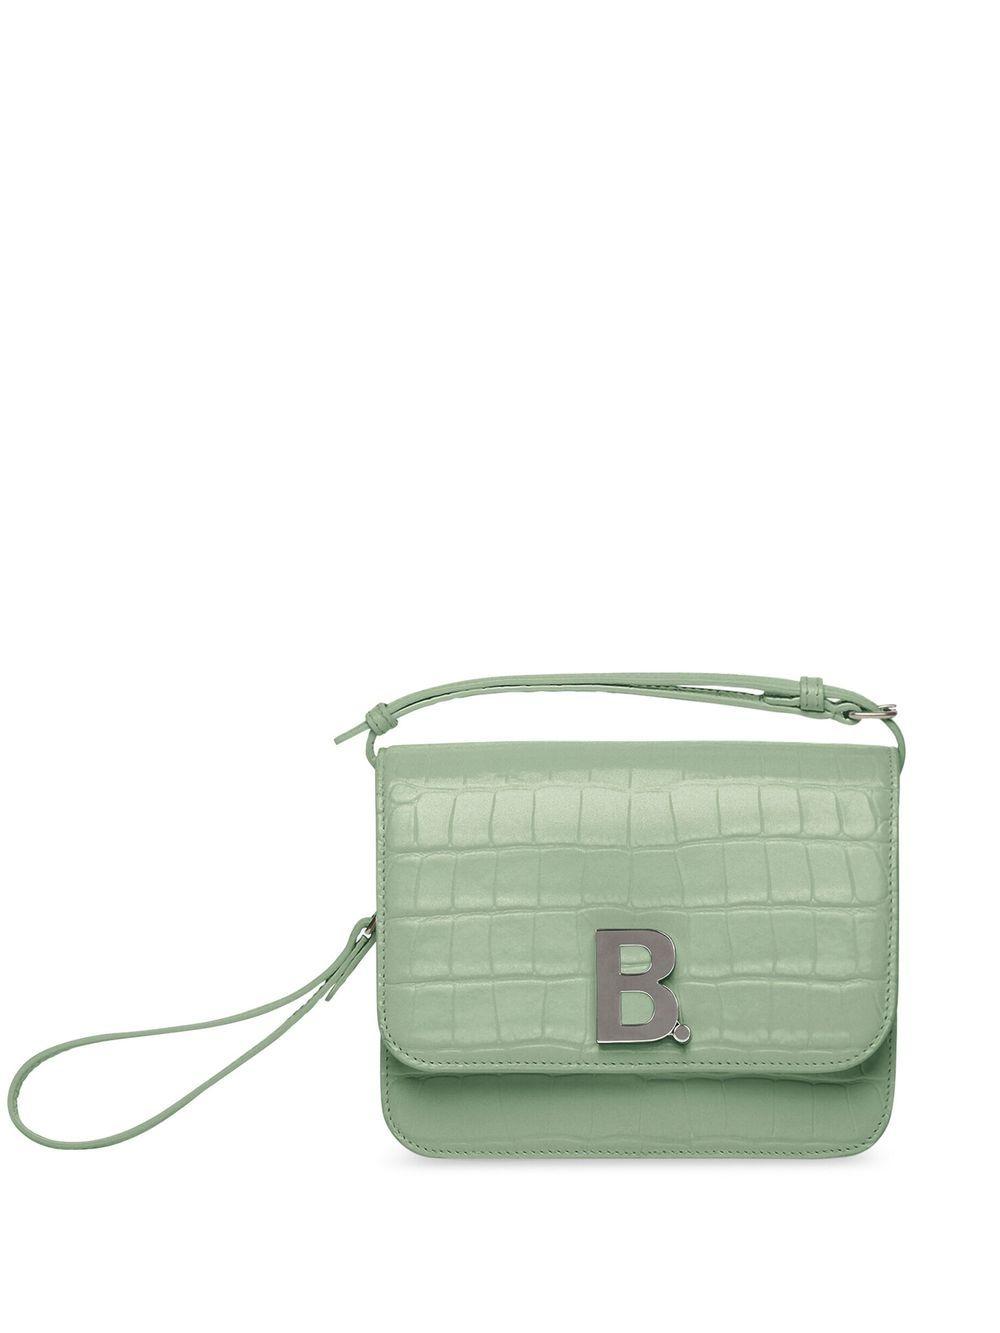 Balenciaga Light Green Small B. Crossbody Bag 618156 1U6FK 3906  3665743618683 - Handbags - Jomashop